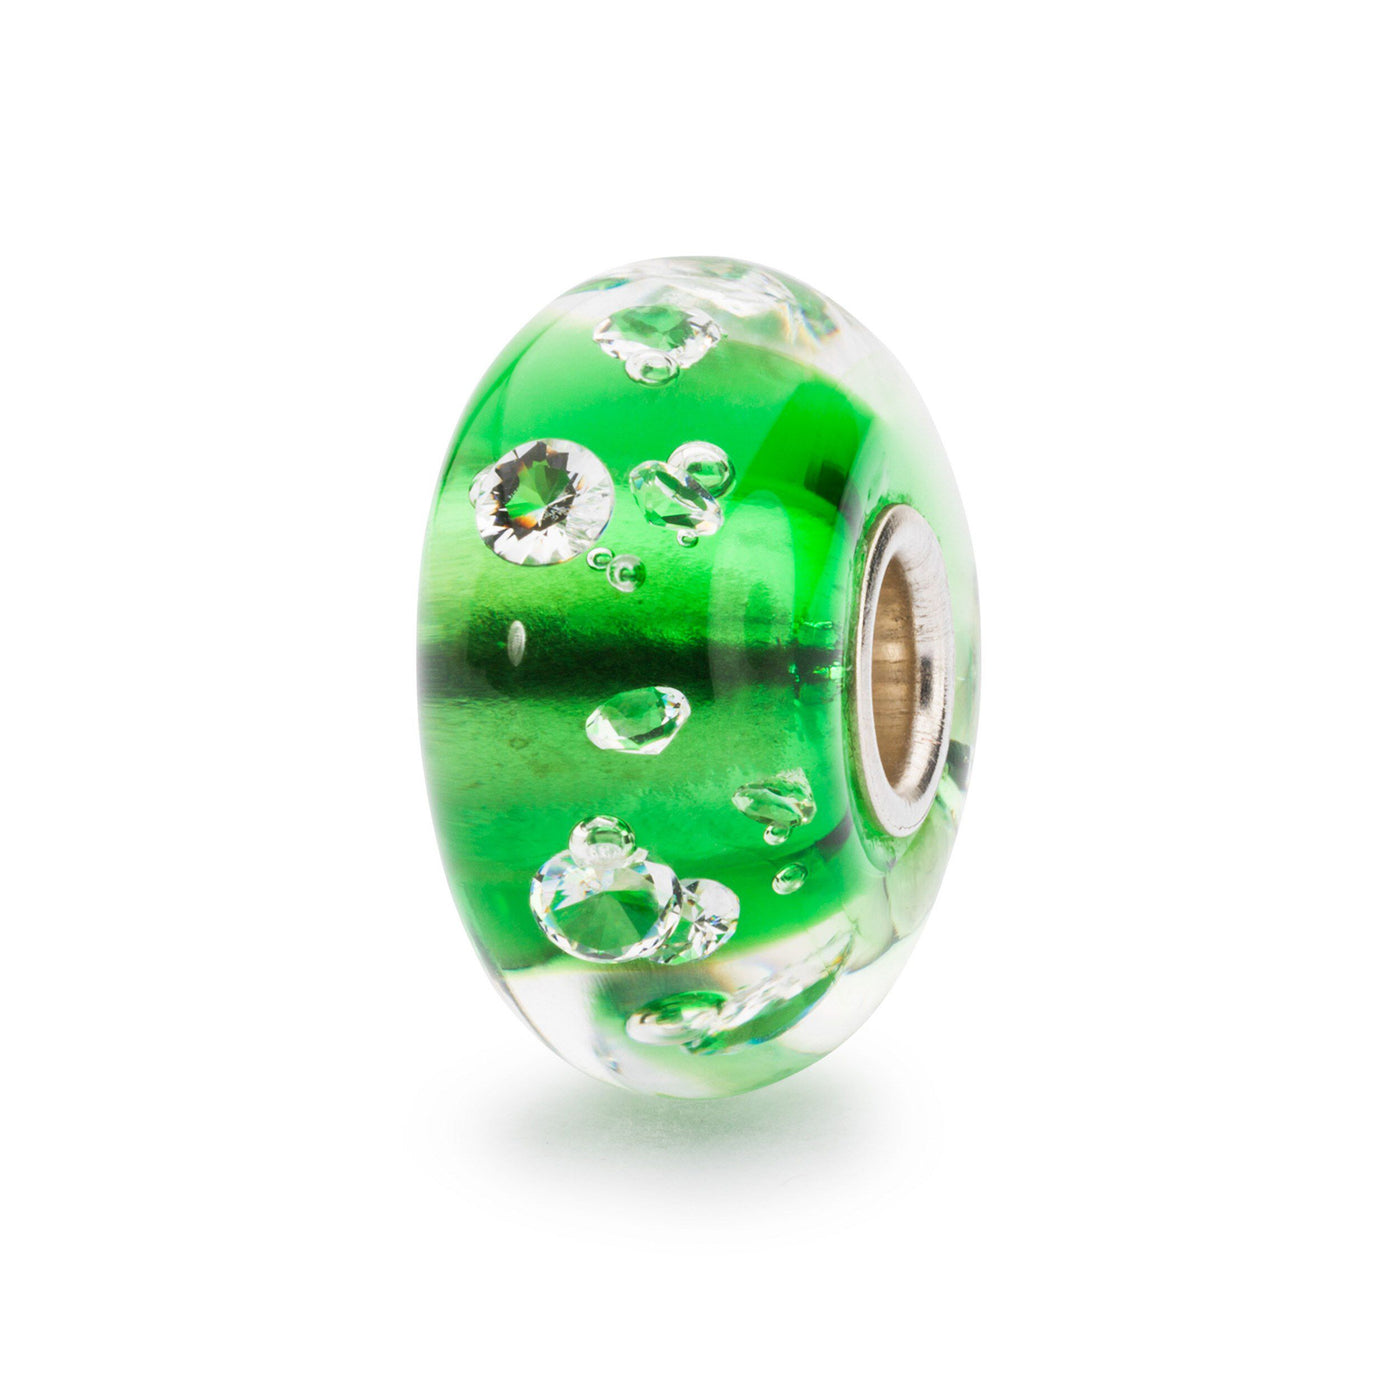 The Diamond Bead, Emerald Green - Trollbeads Canada